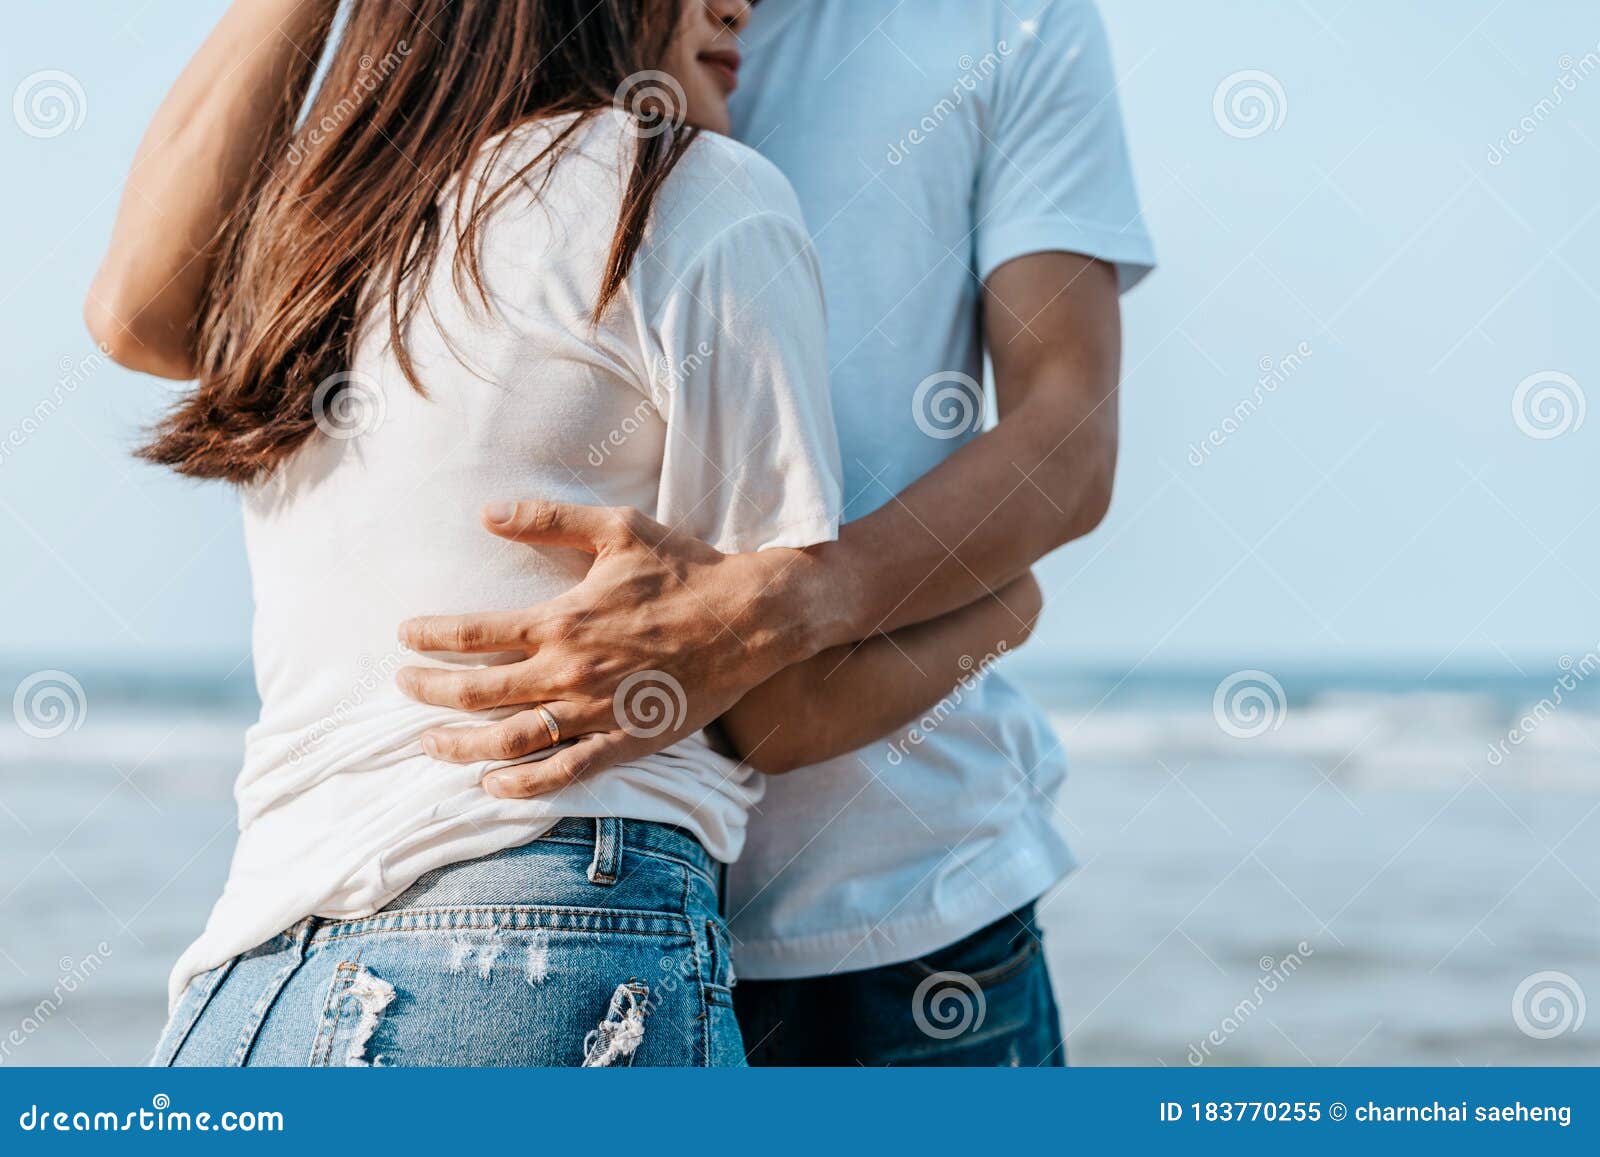 Romantic Couple Having Love and Hug on the Beach Stock Image ...